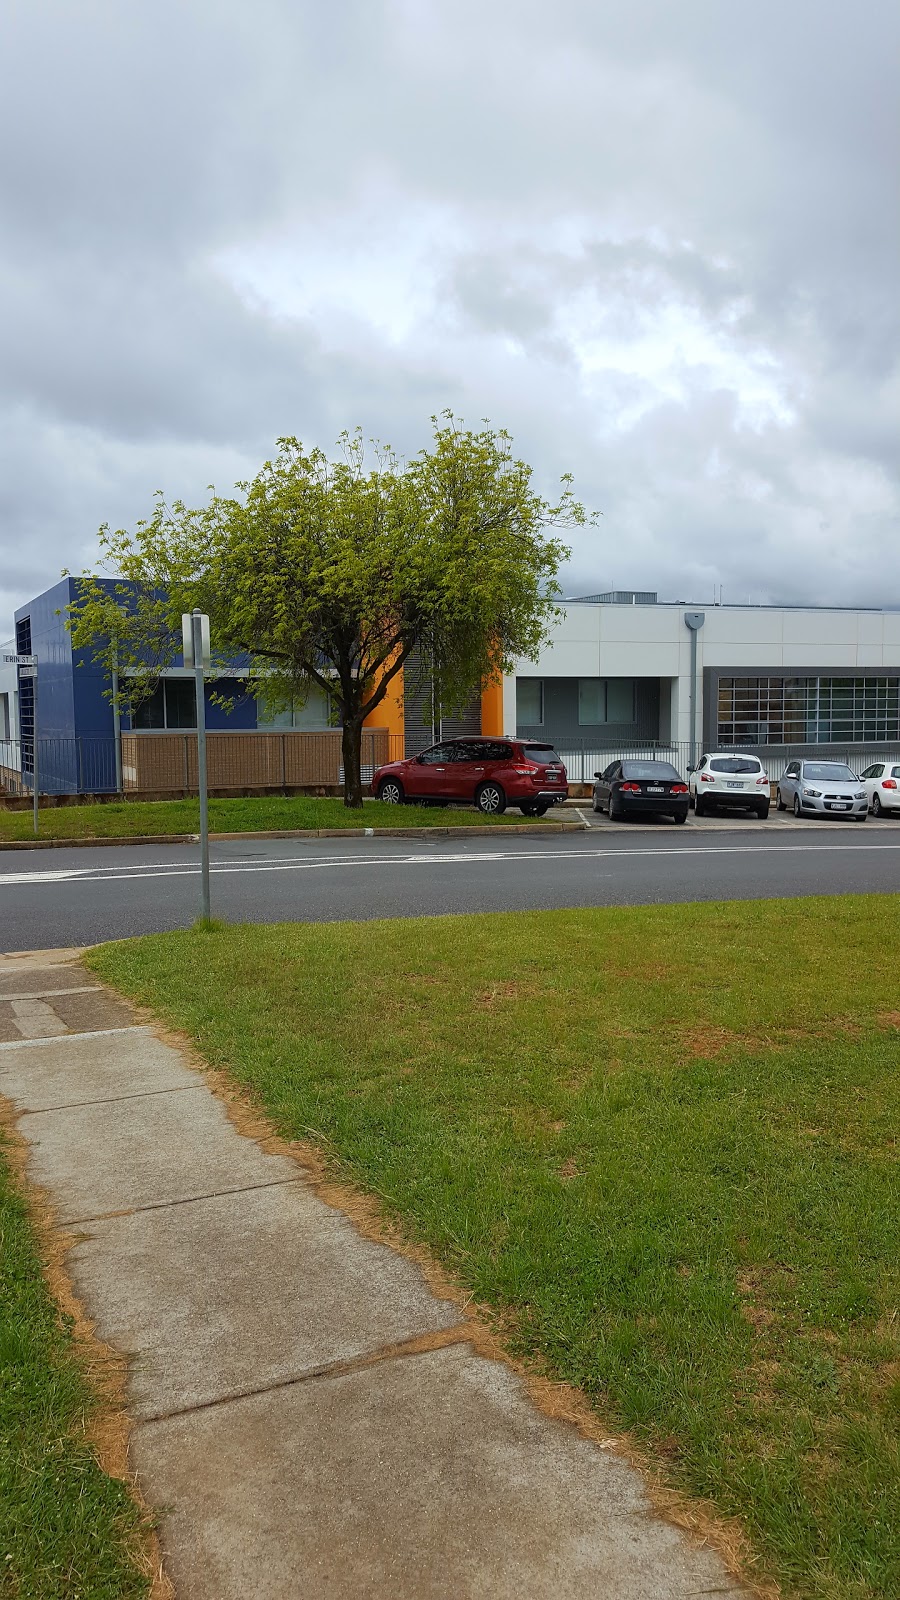 Queanbeyan District Hospital & Health Service | hospital | 107 Collett St, Queanbeyan NSW 2620, Australia | 0261507000 OR +61 2 6150 7000